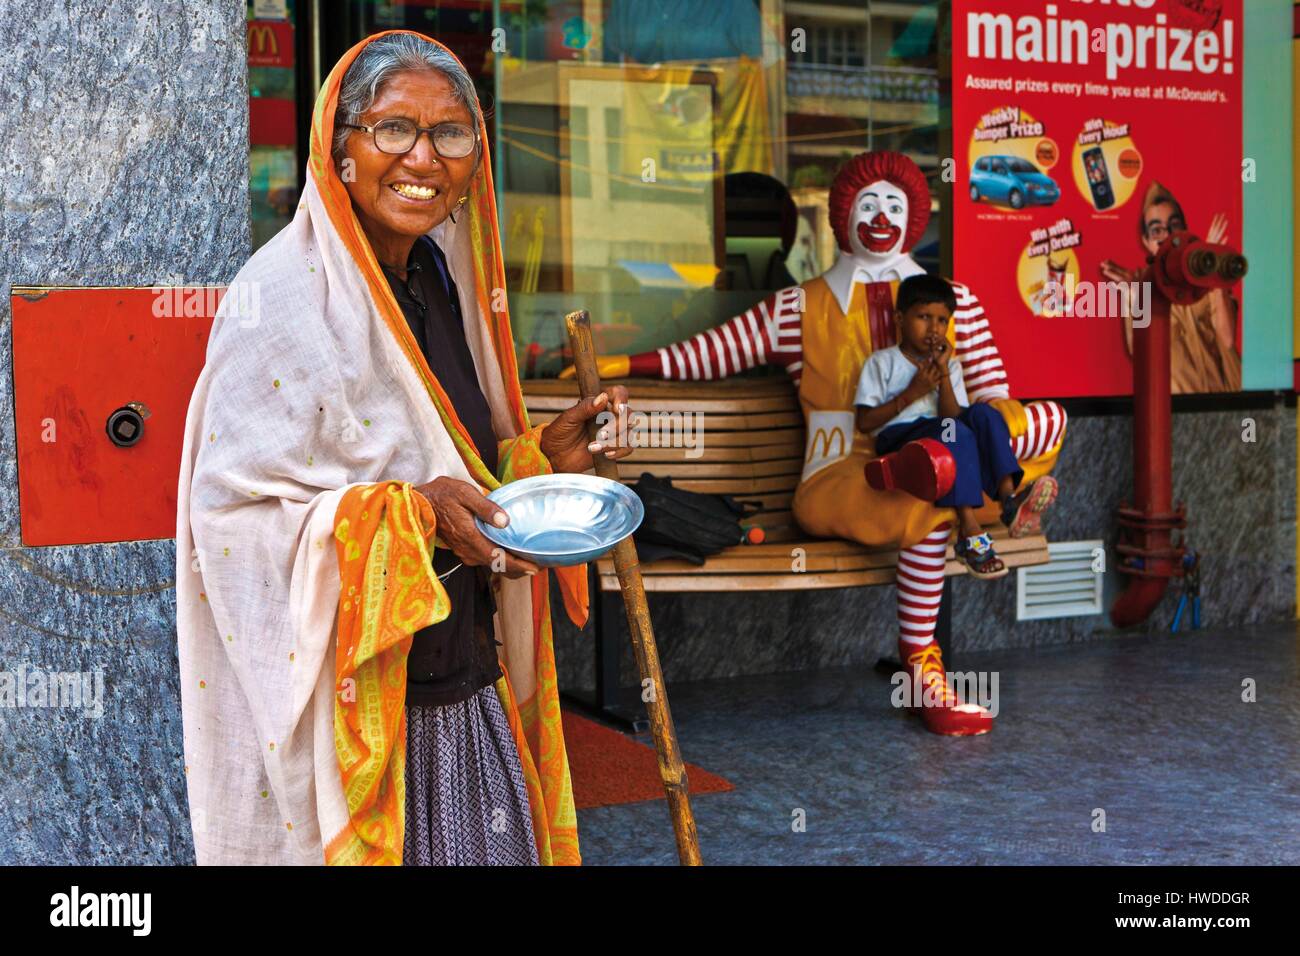 L'Inde, le territoire de la capitale nationale de Delhi, Old-Delhi, mendiant devant un enseigne Macdonald Banque D'Images